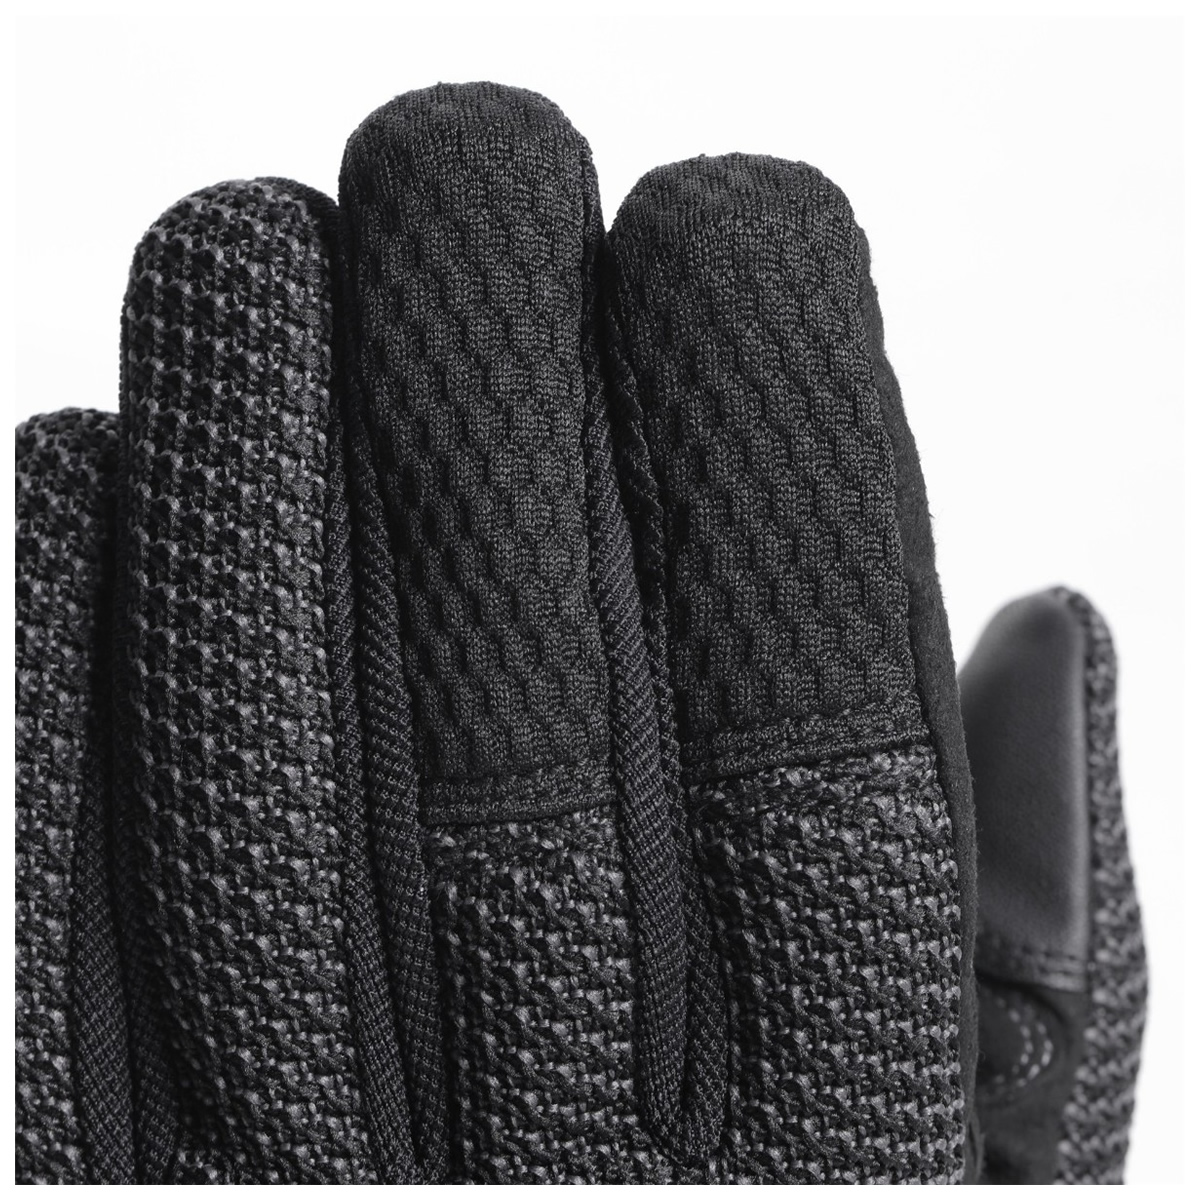 Dainese Damen Handschuhe Torino, schwarz-anthrazit